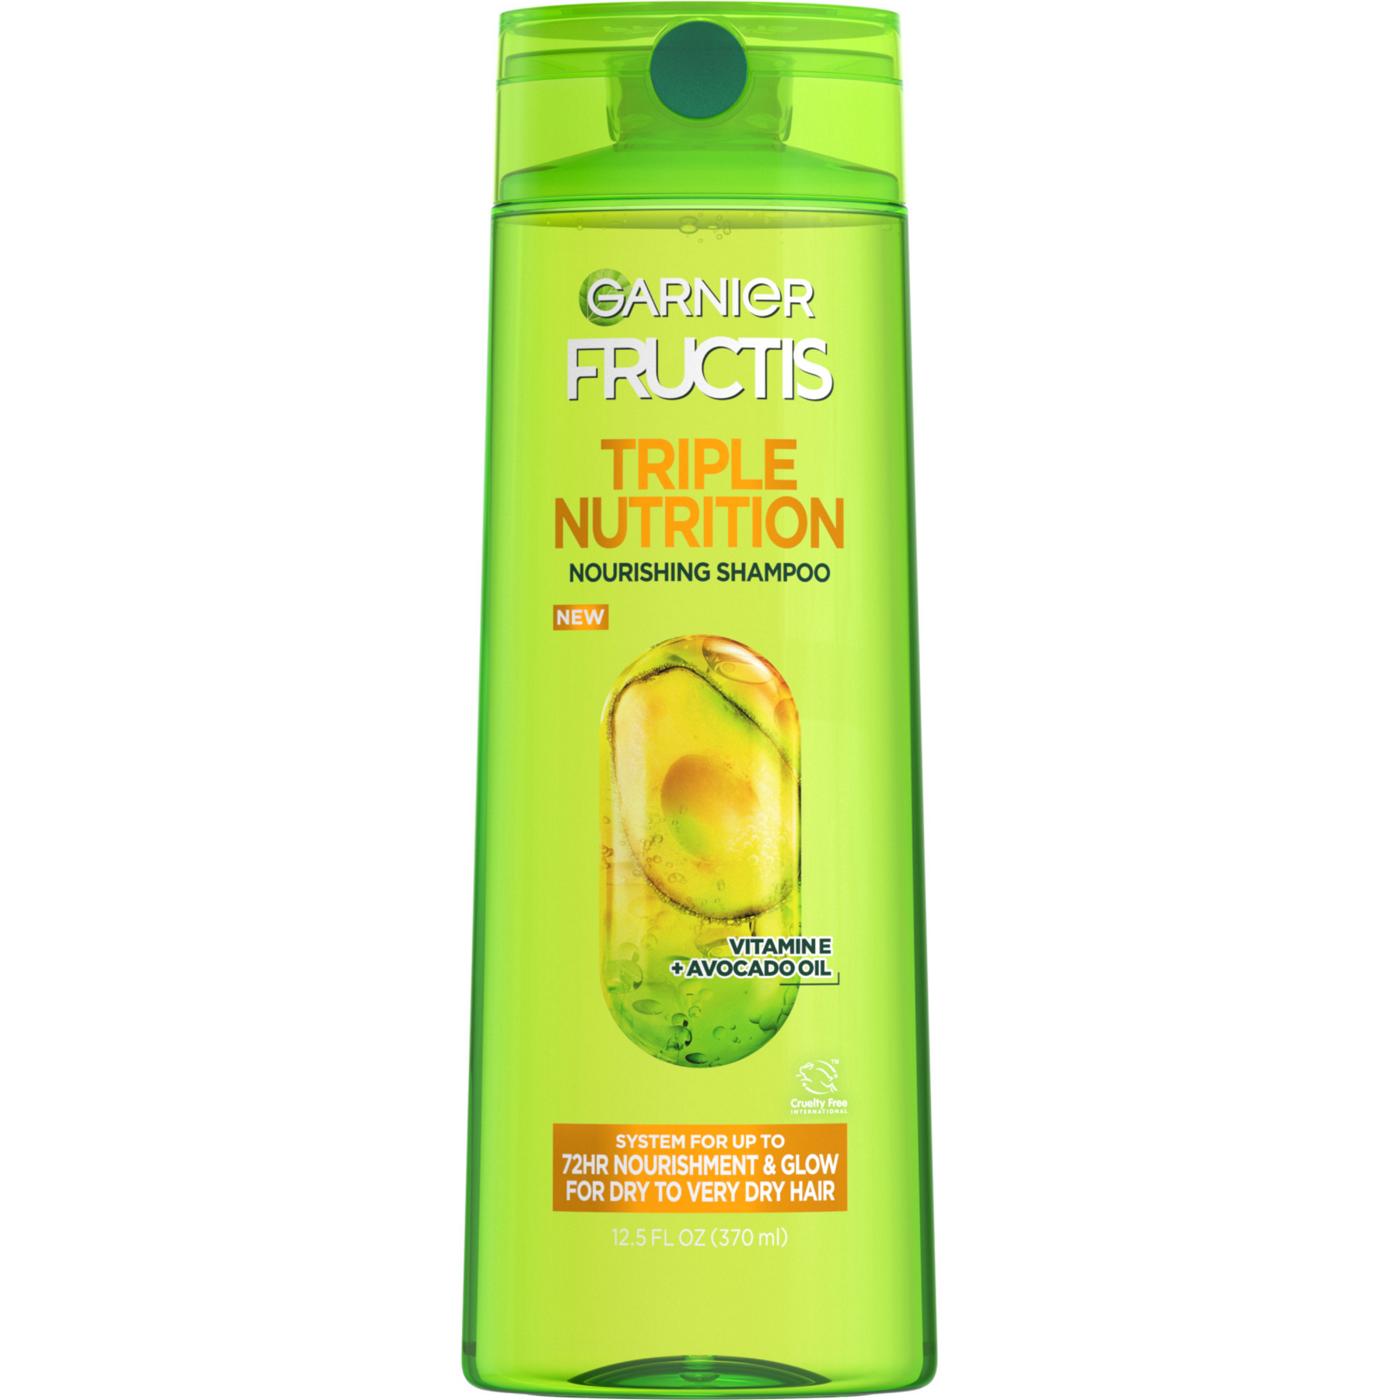 Garnier Fructis Triple Nutrition Nourishing Shampoo; image 1 of 7